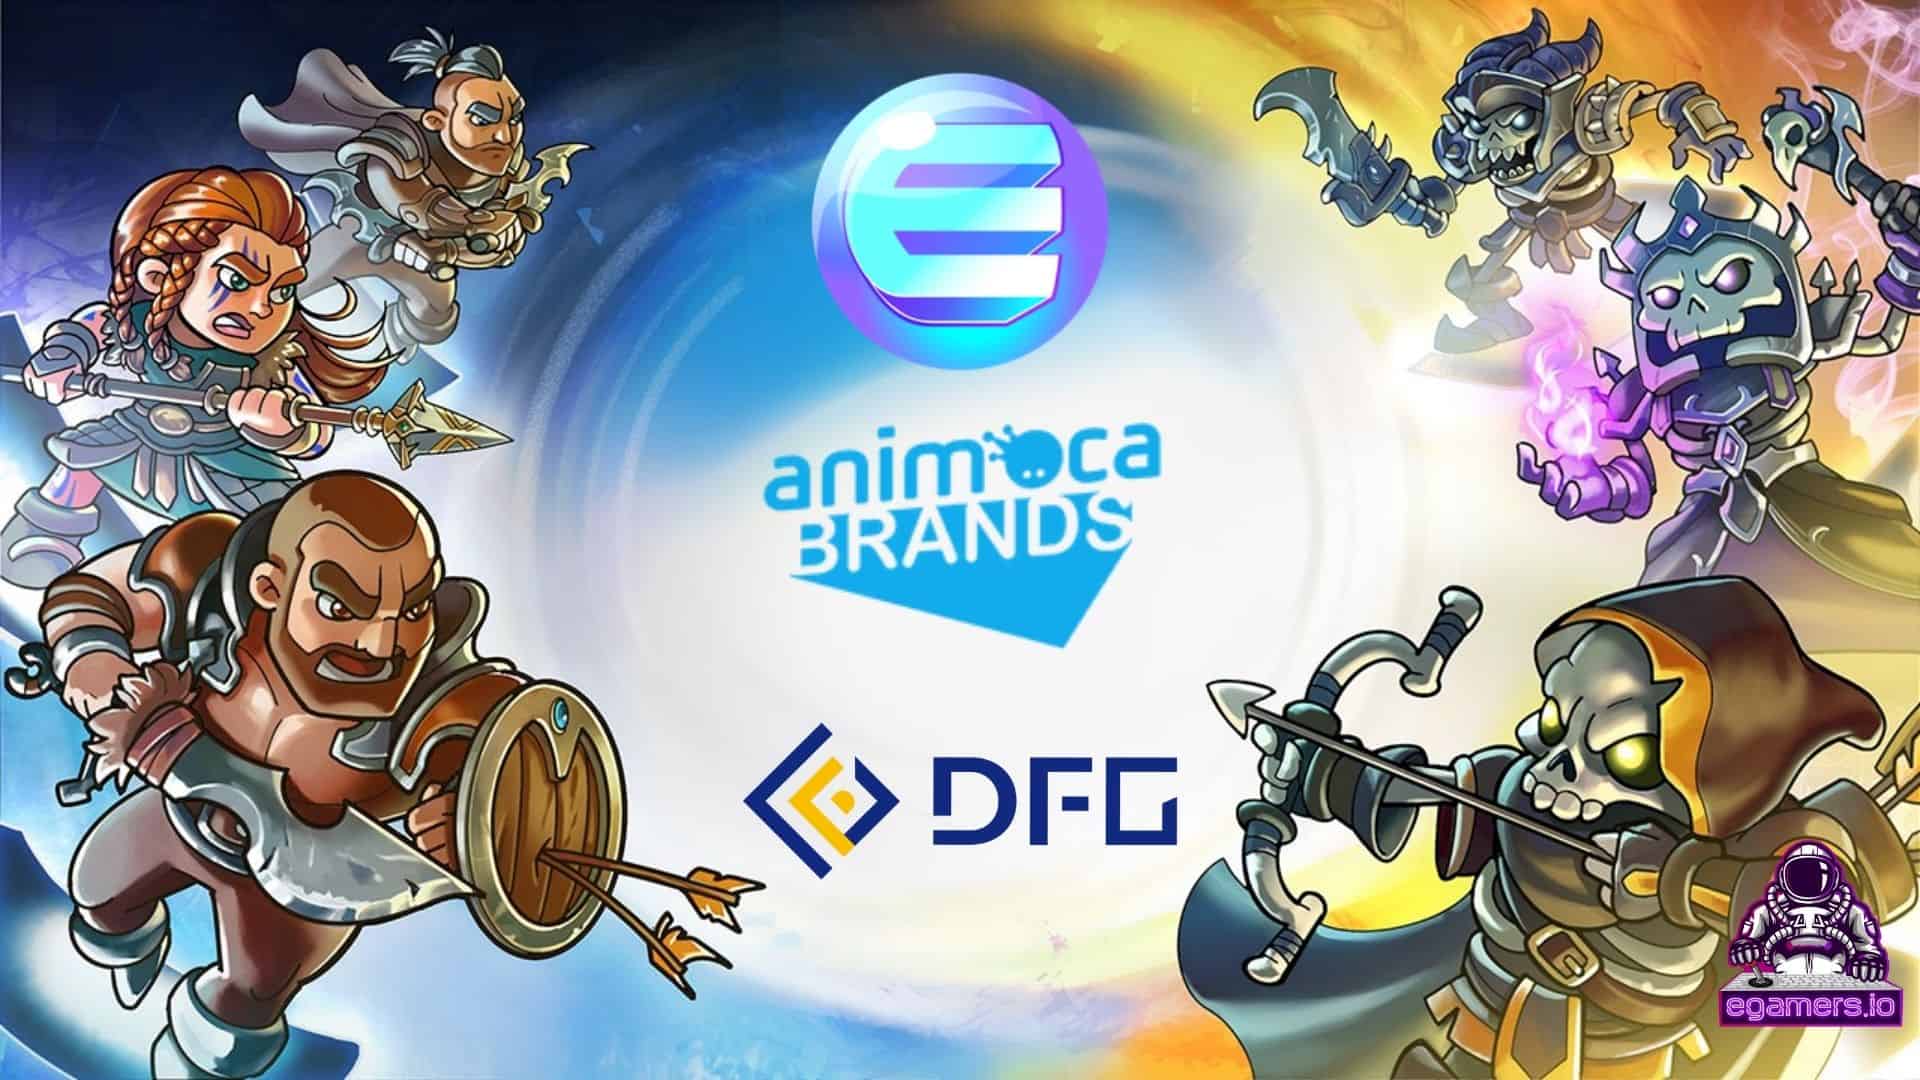 Kingdom Karnage raises 2M from Animoca Brands DFG and Enjin Kingdom Karnage raises M from Animoca Brands, DFG, and Enjin to boost its GameFi features.